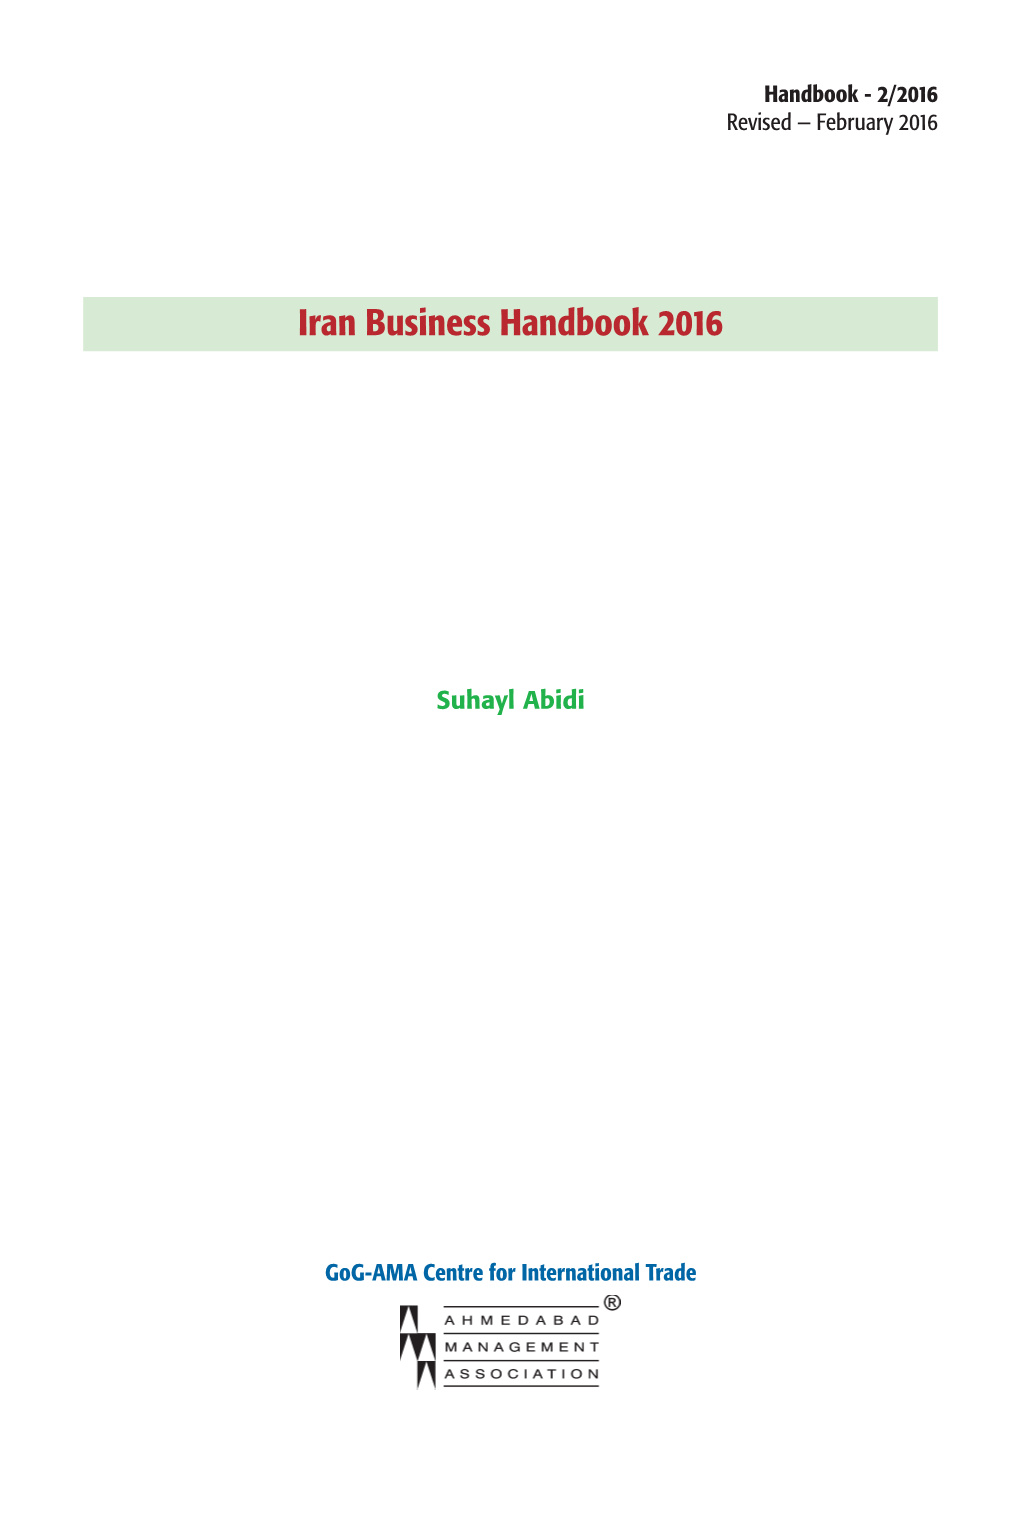 Iran Business Handbook 2016